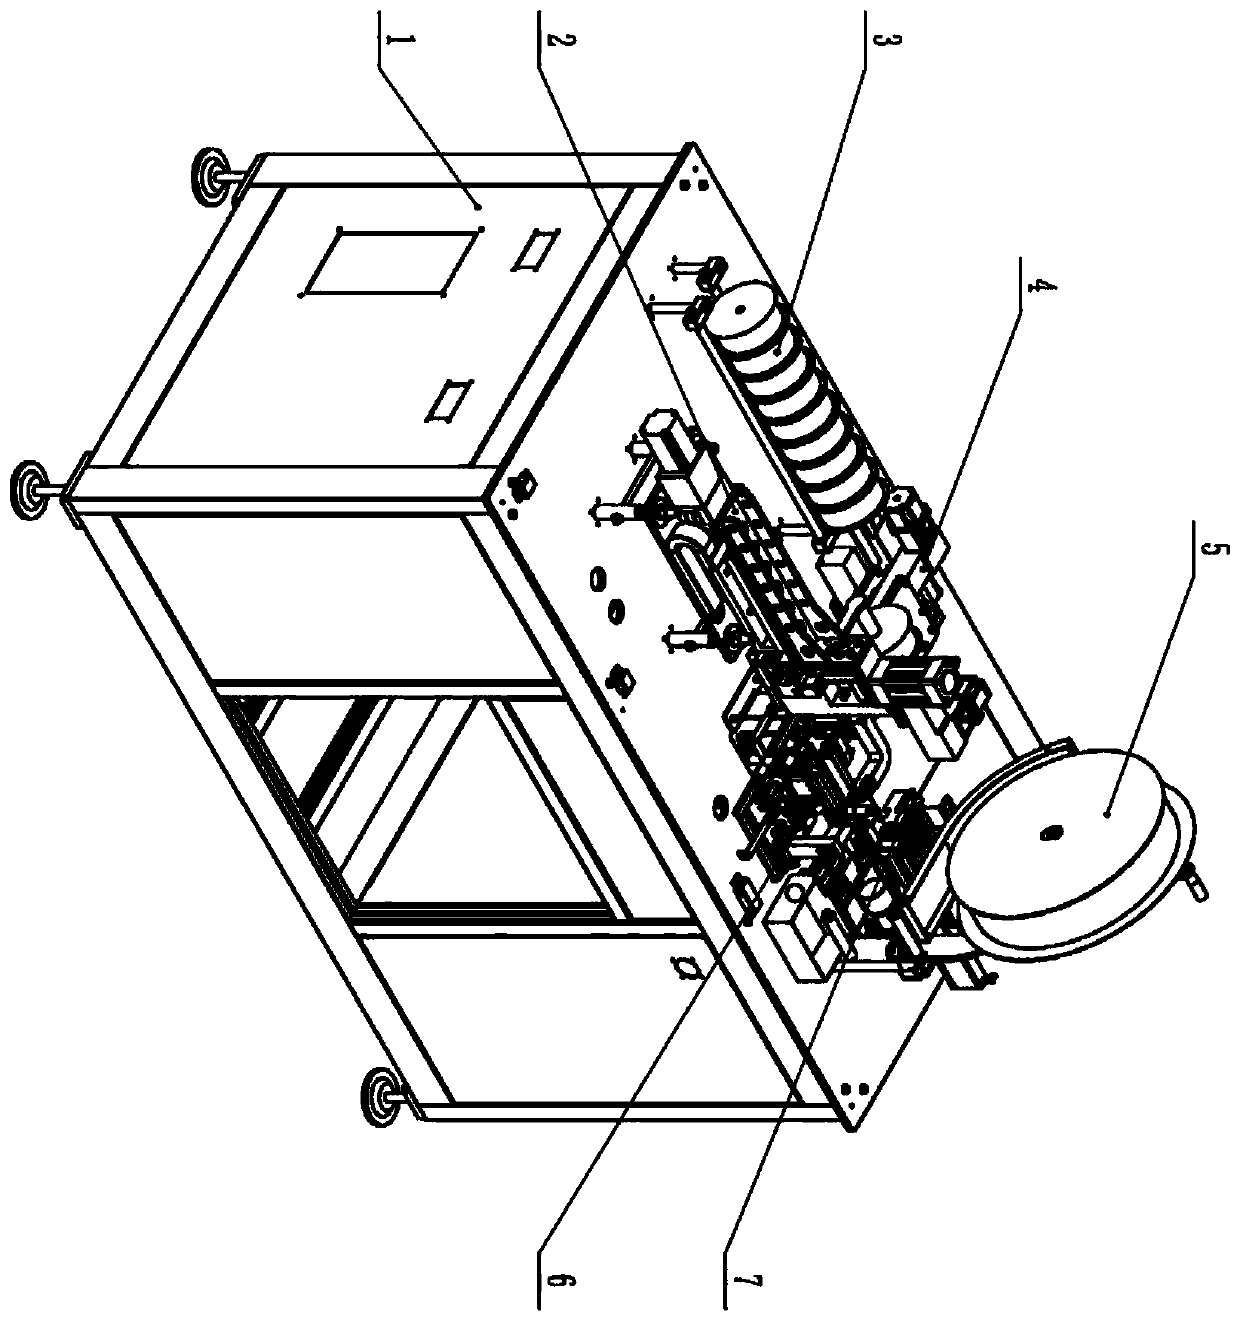 Screen stapling machine and working method thereof